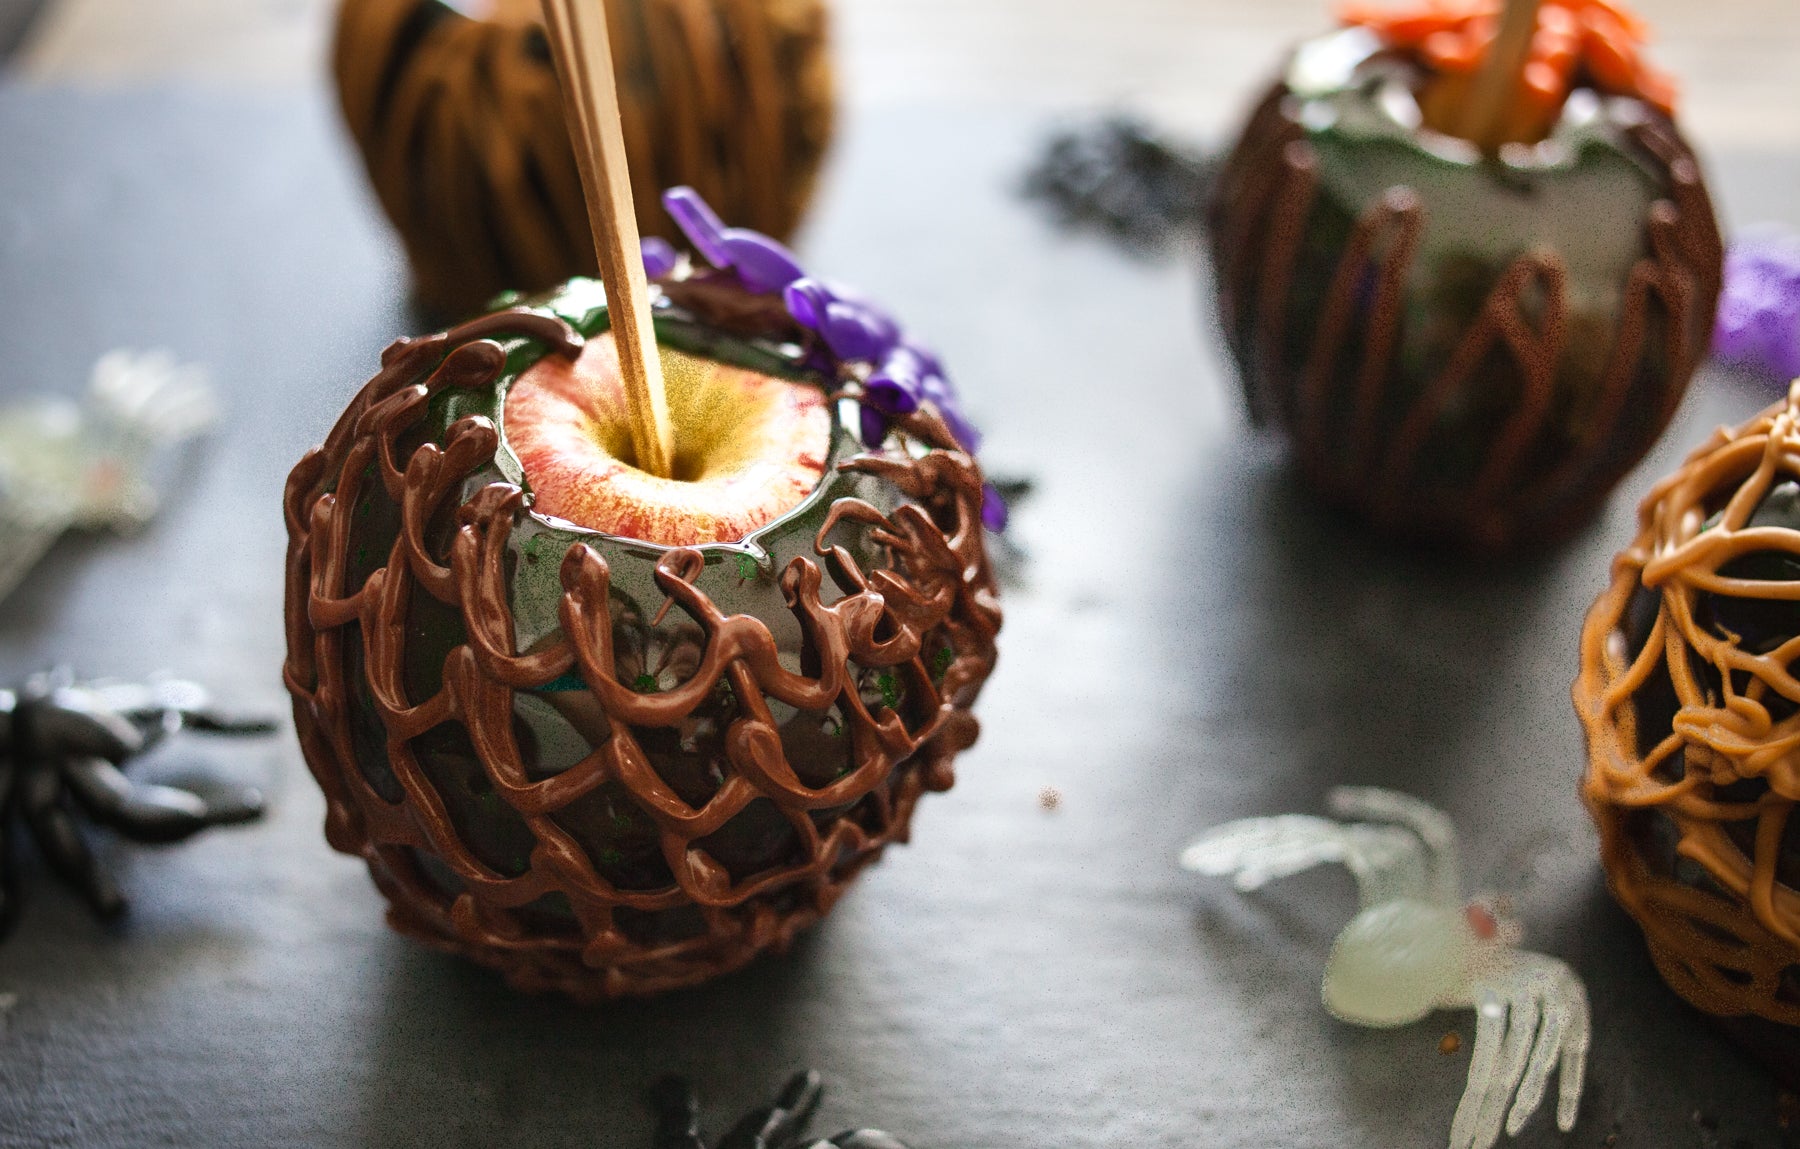 DIY Halloween Candy Apples